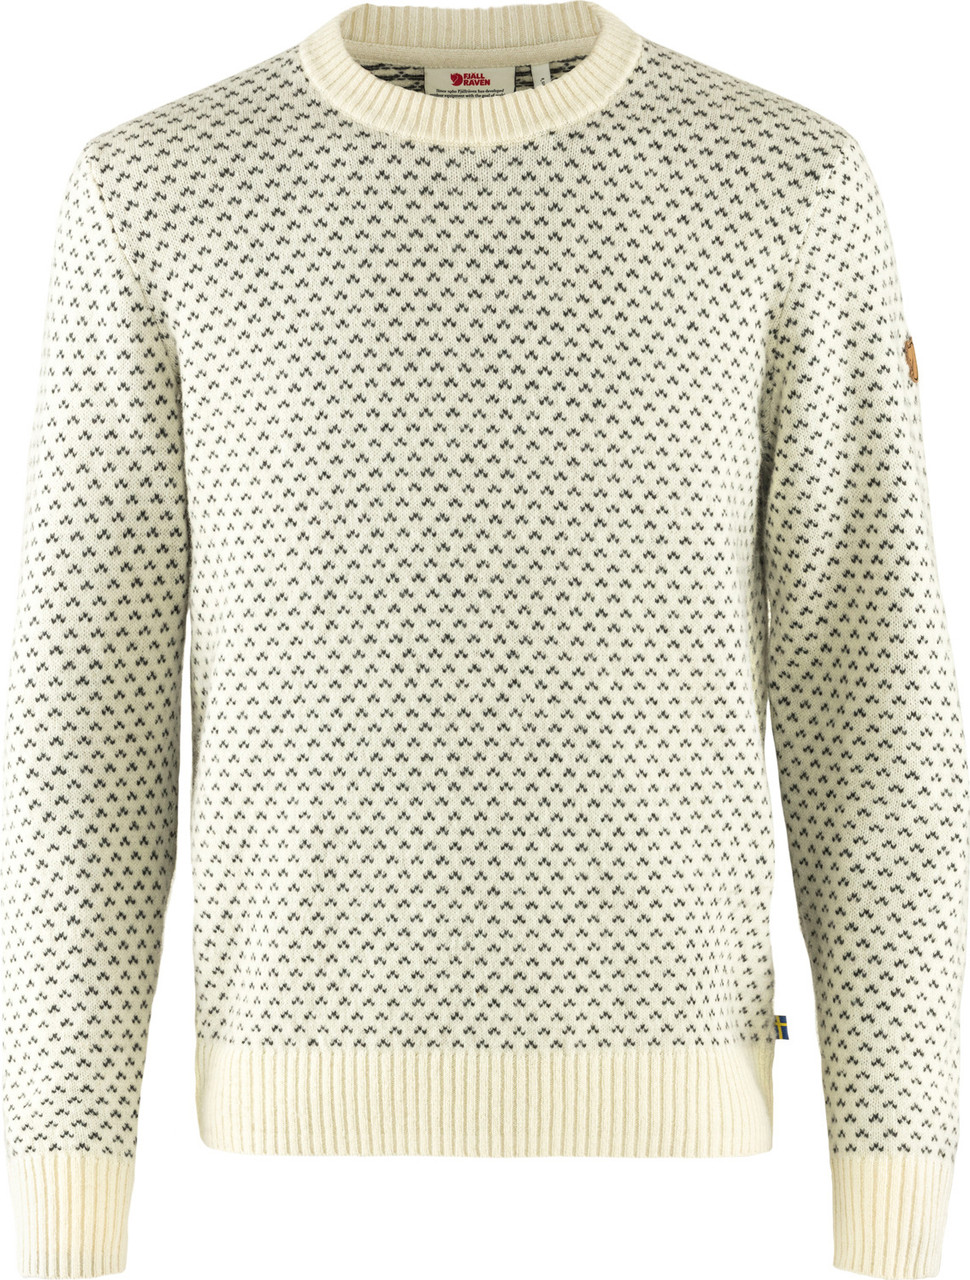 Fjallraven Ovik Nordic Sweater - Men's | MEC